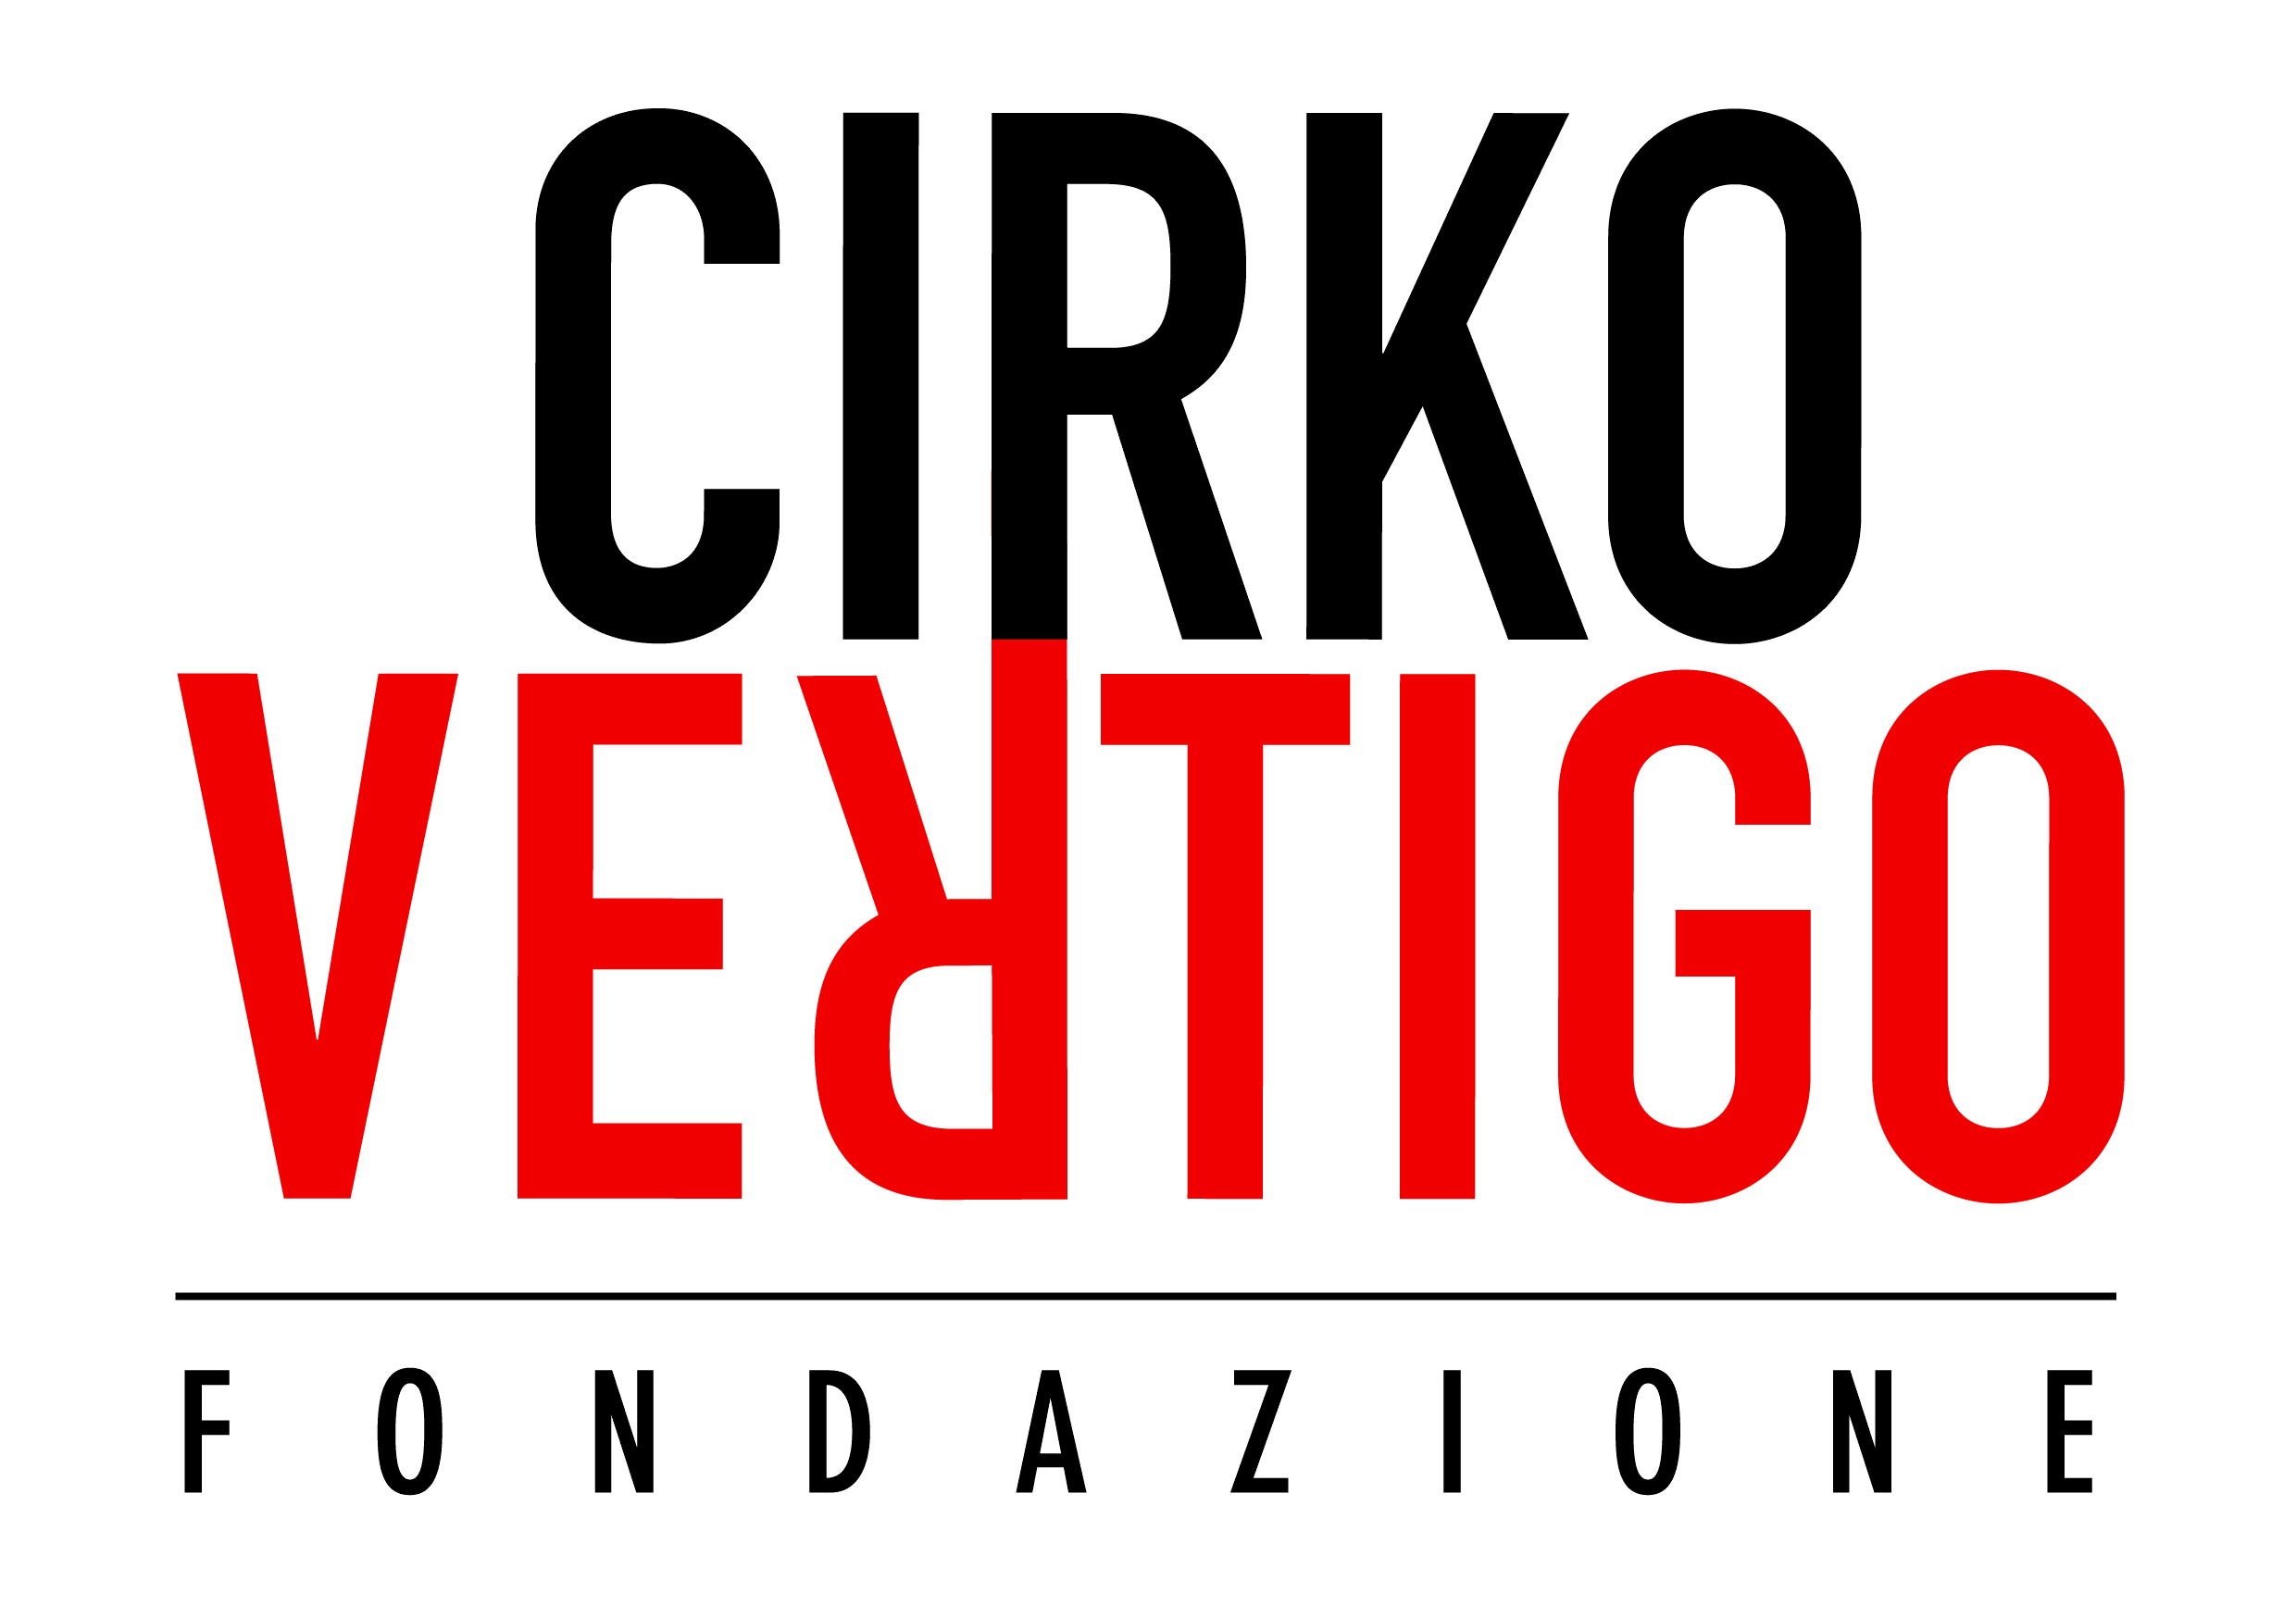 Fondazione Cirko Vertigo